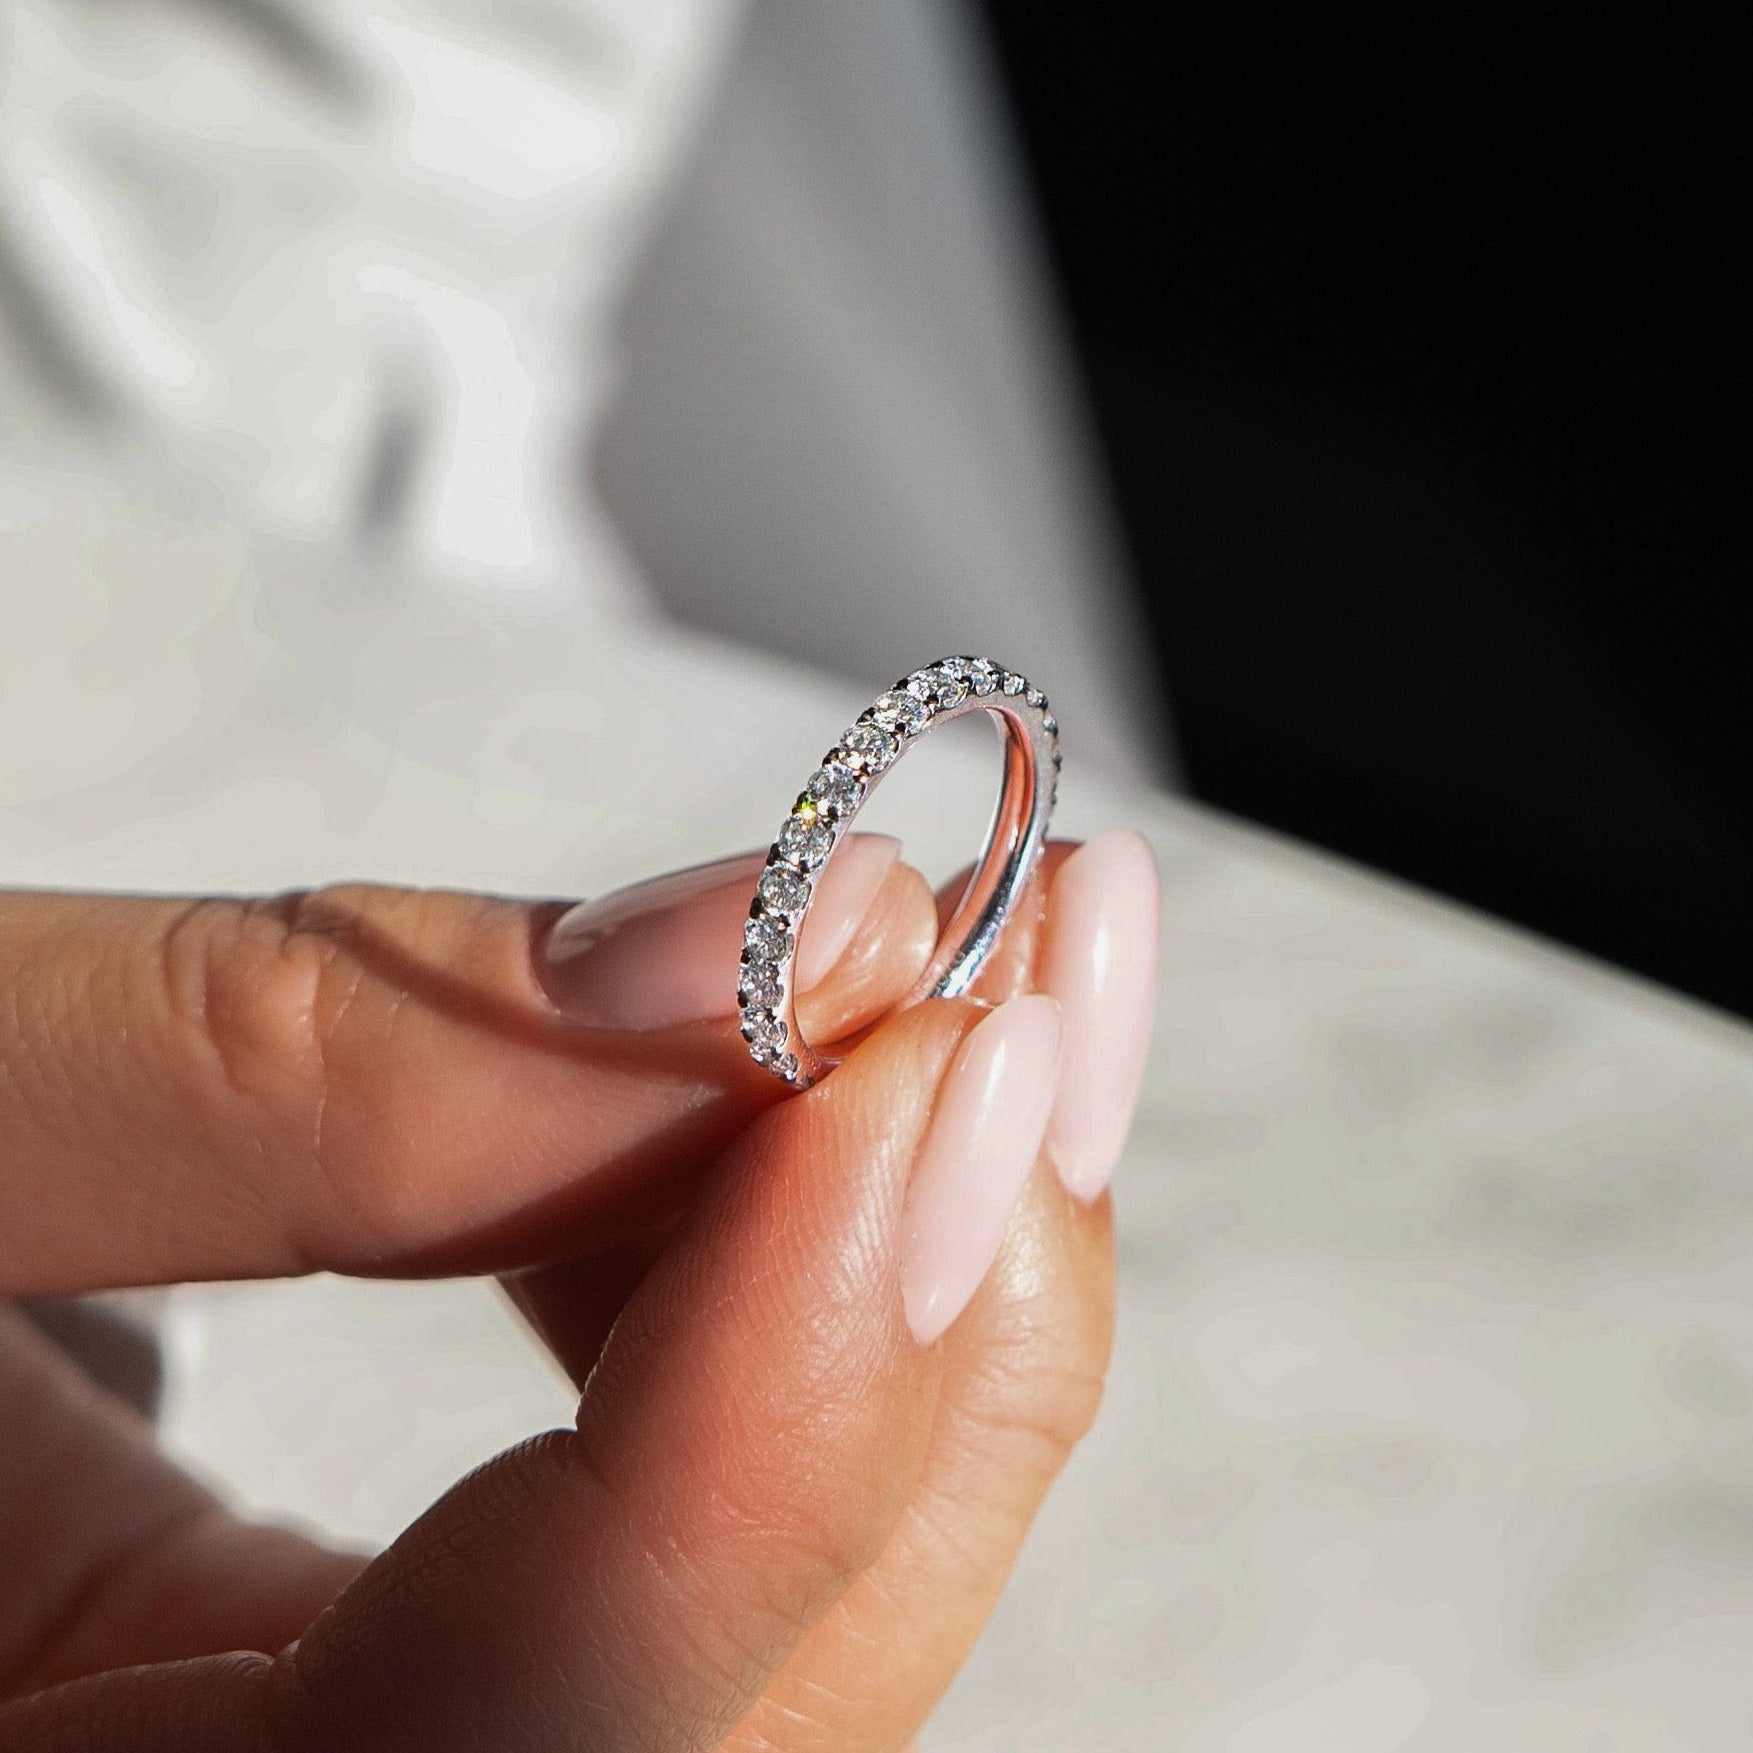 Eternity ring, platinum, size 52